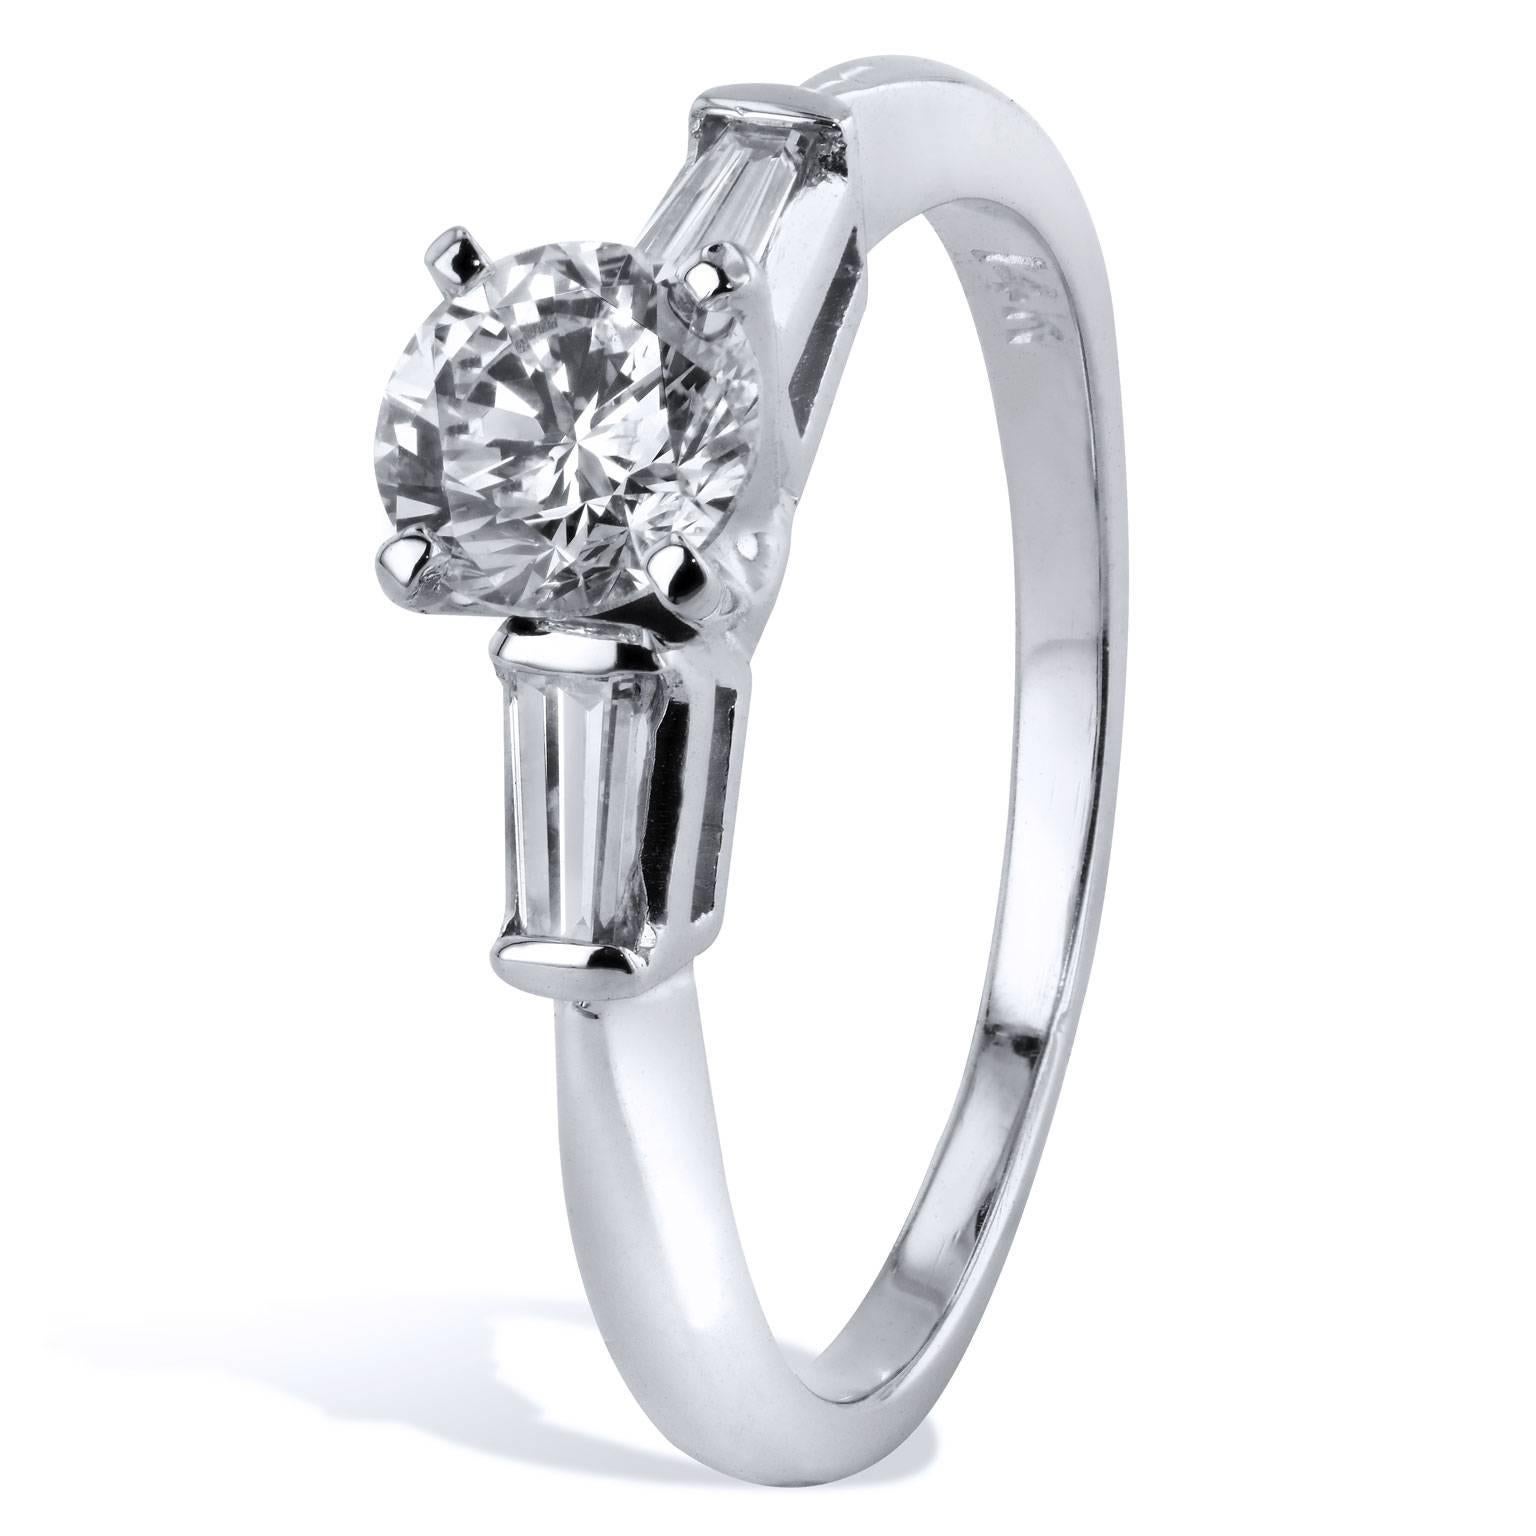 0.64 carat diamond ring